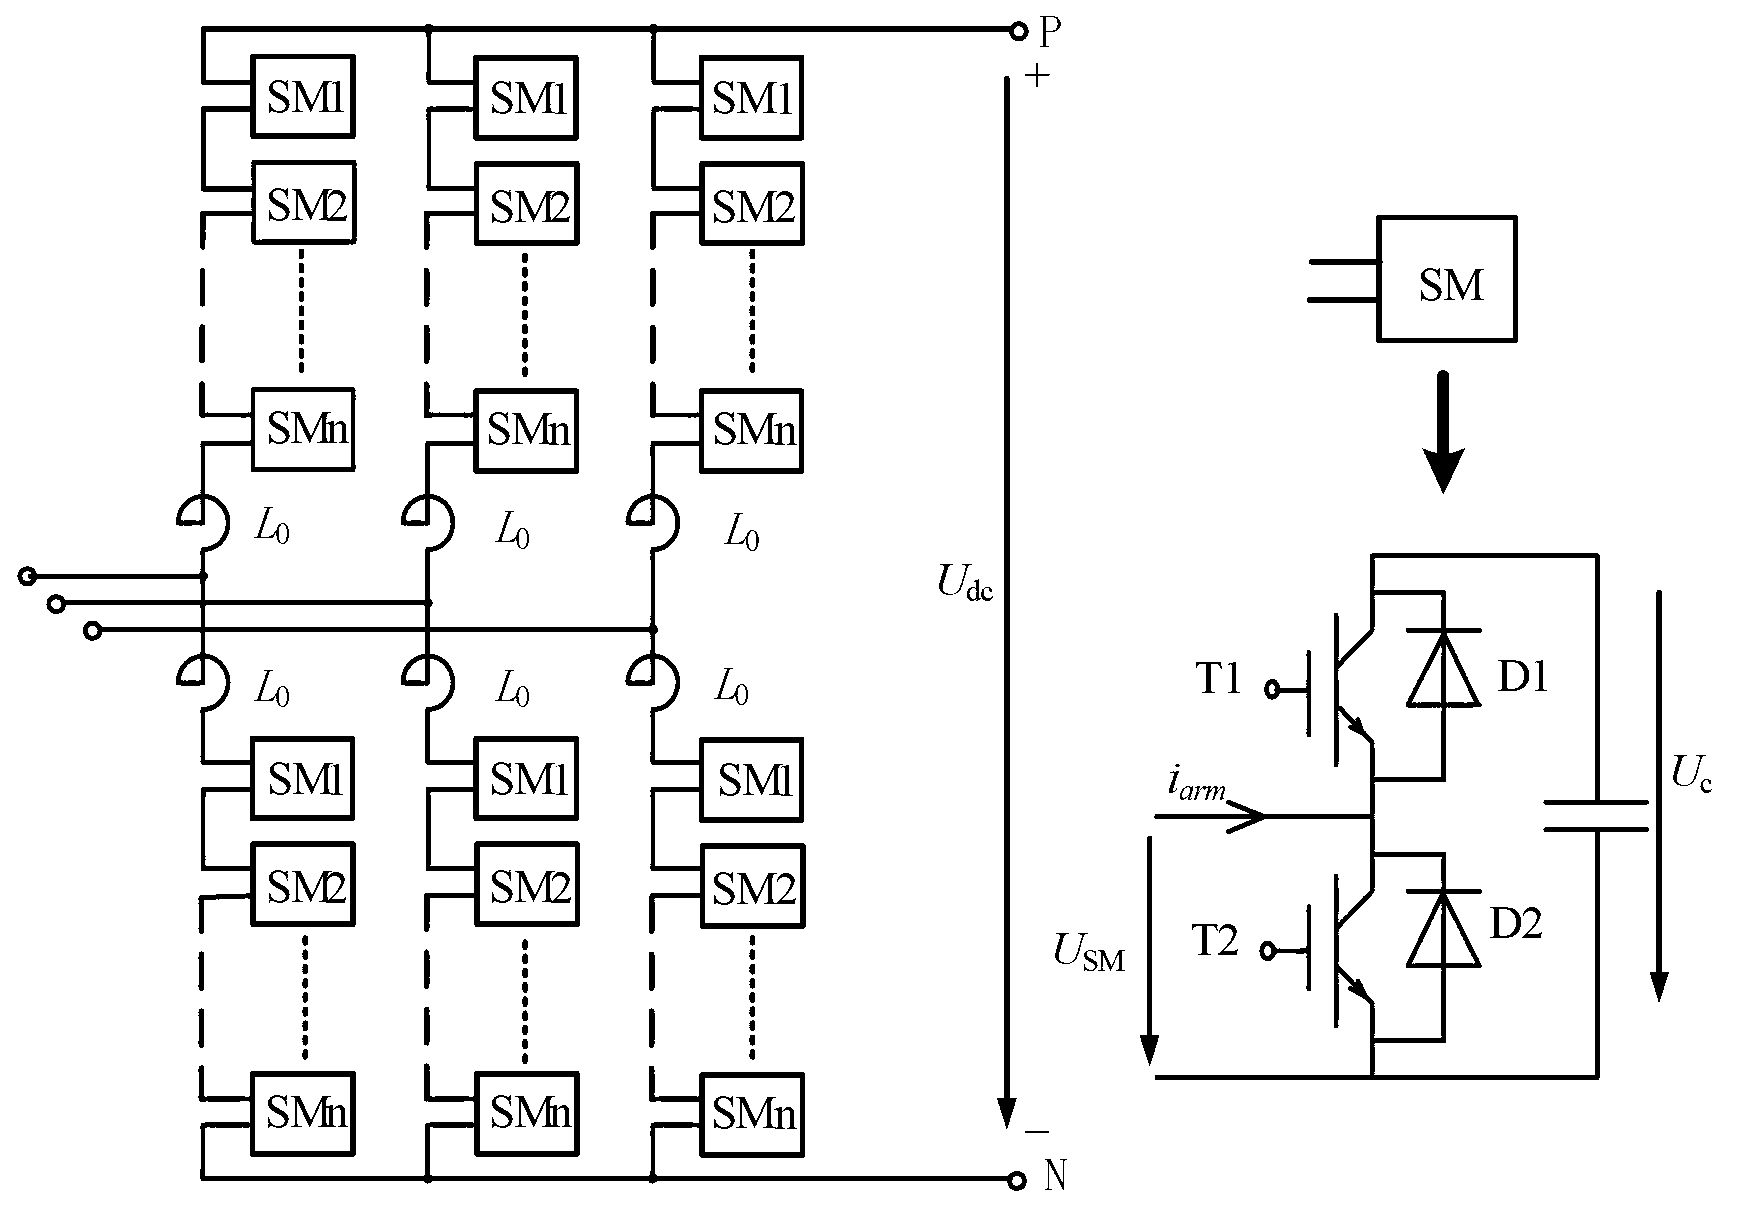 Sub-module fault diagnosis method of modular multilevel converter